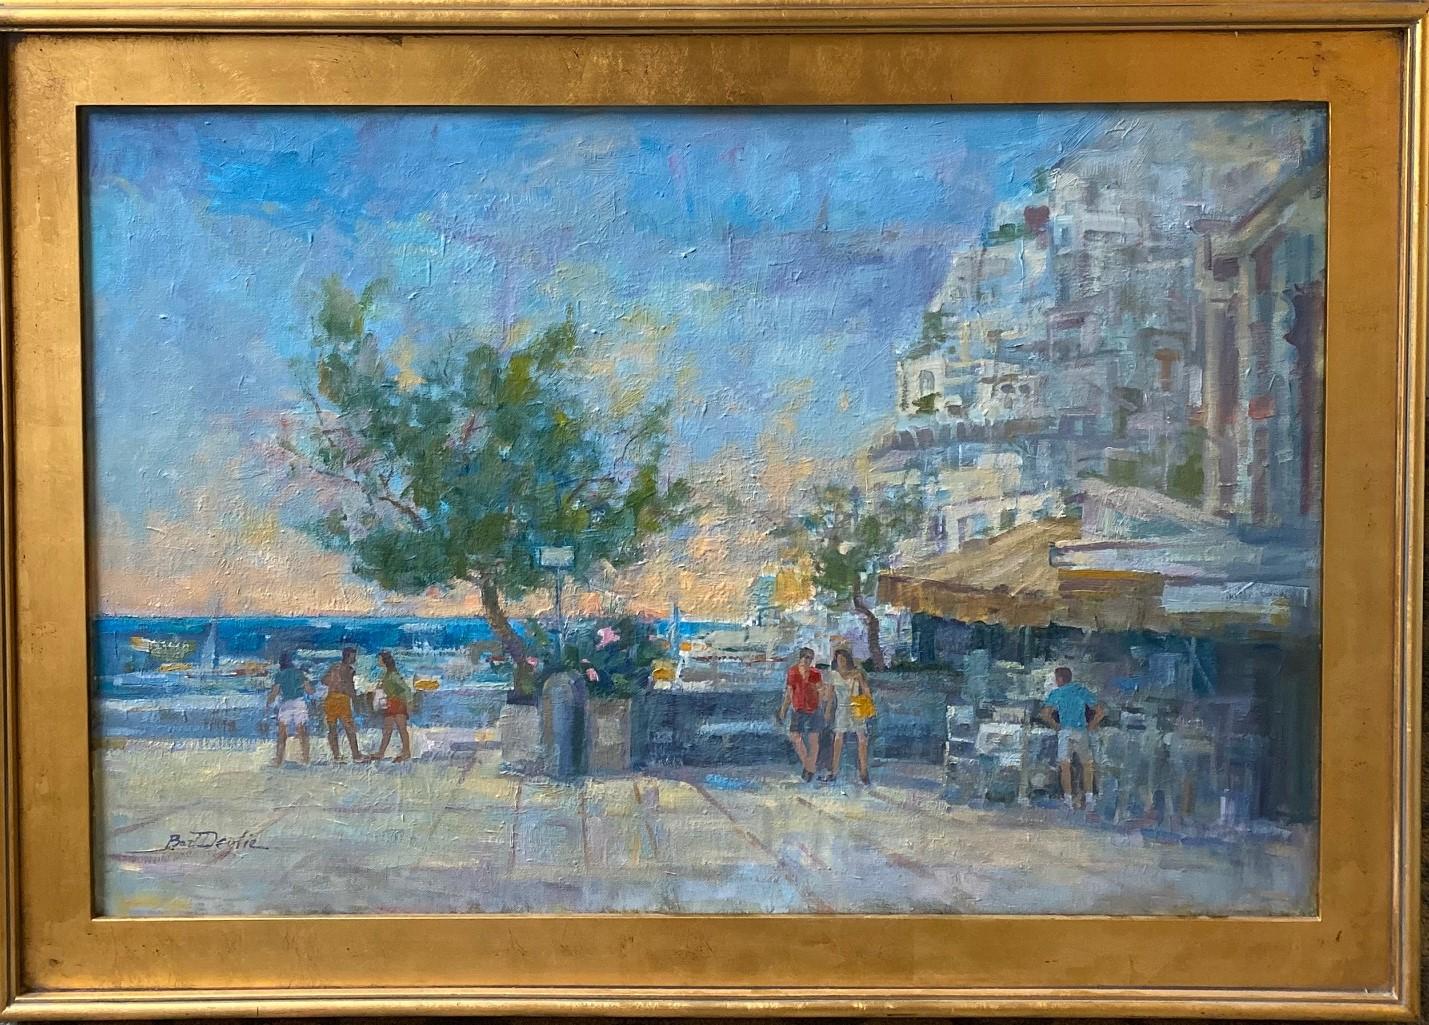 Positano Beach Front, 24x36 original Italian impressionist marine landscape